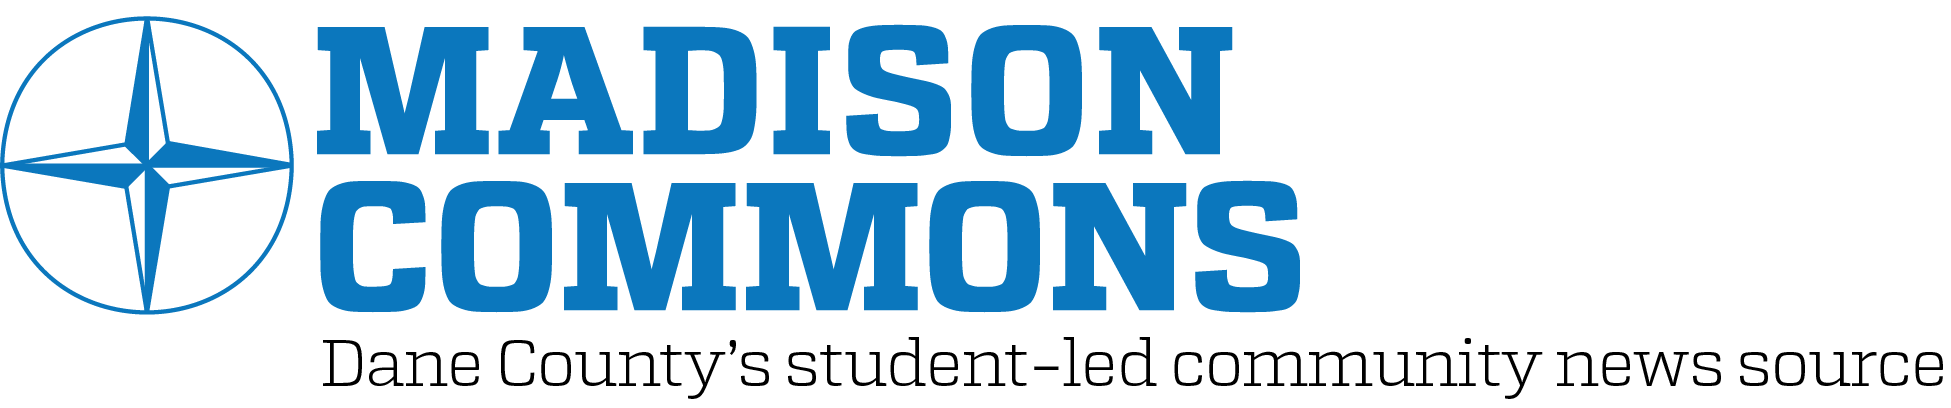 Madison Commons – Dane county Community News